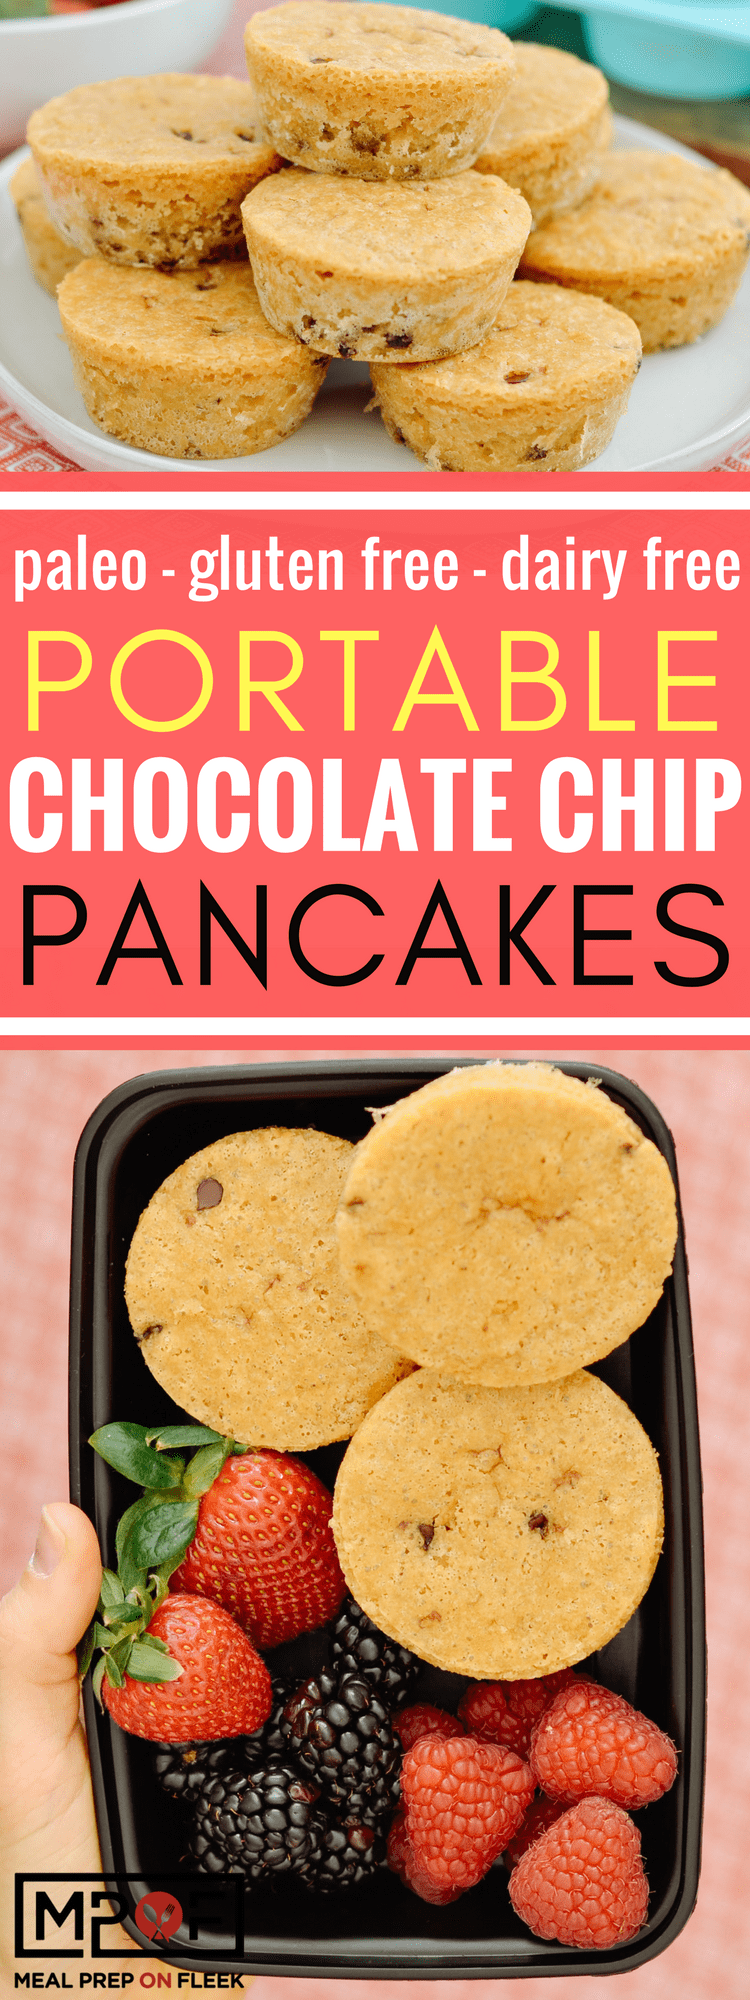 Portable Chocolate Chip Pancakes blog